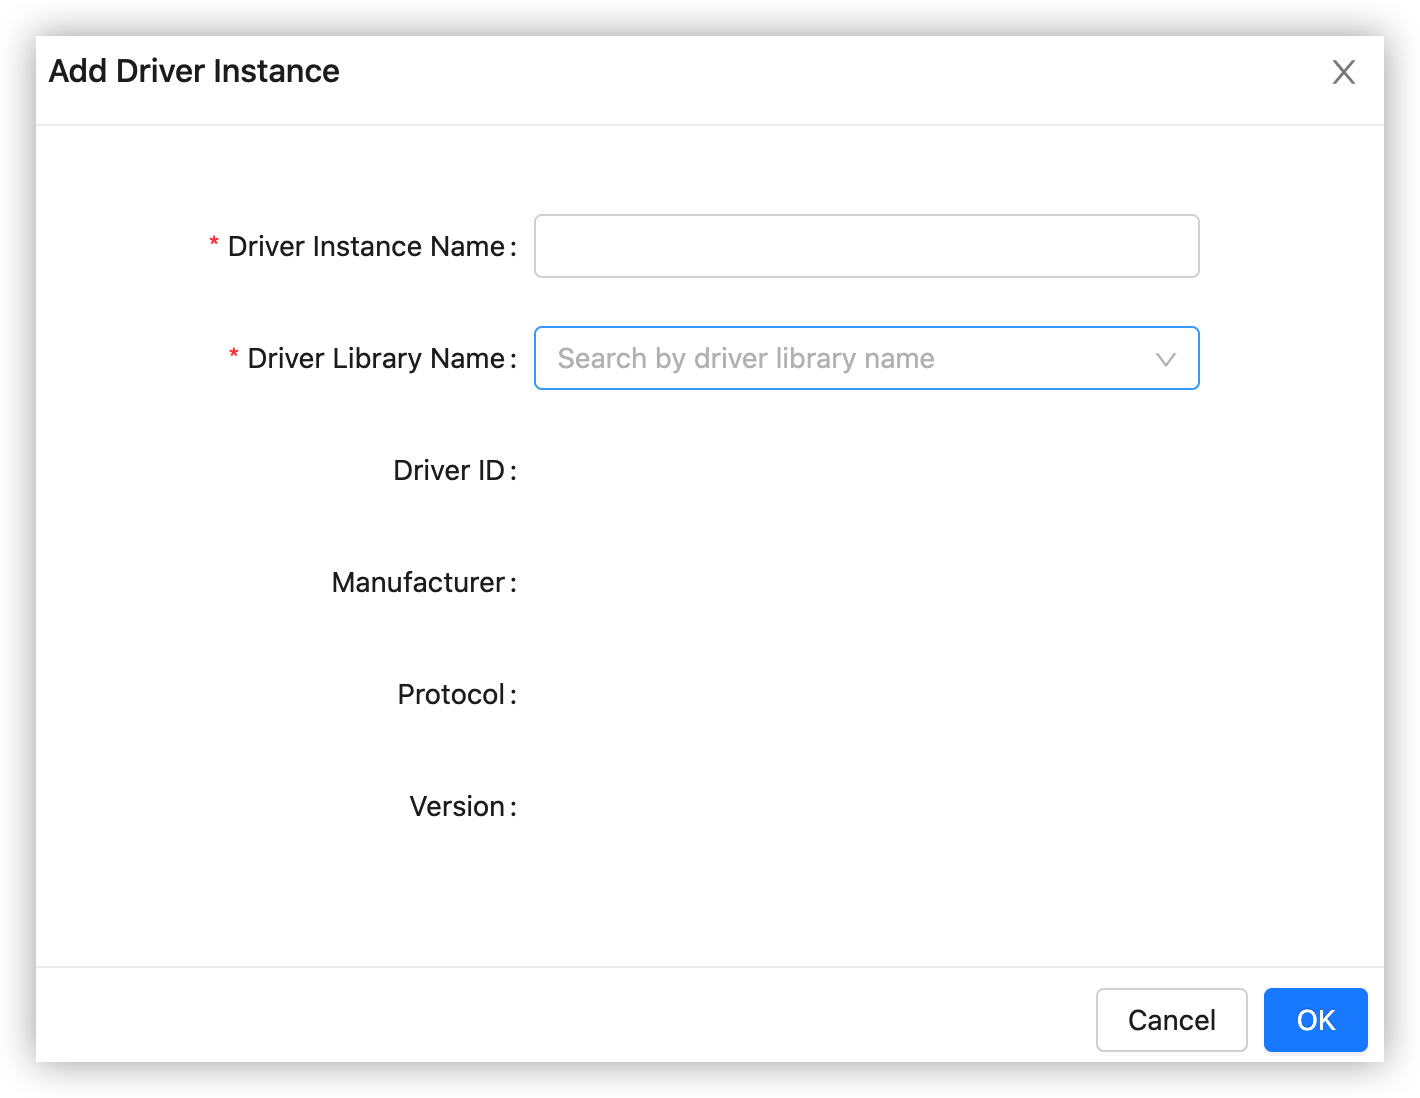 Add a driver instance